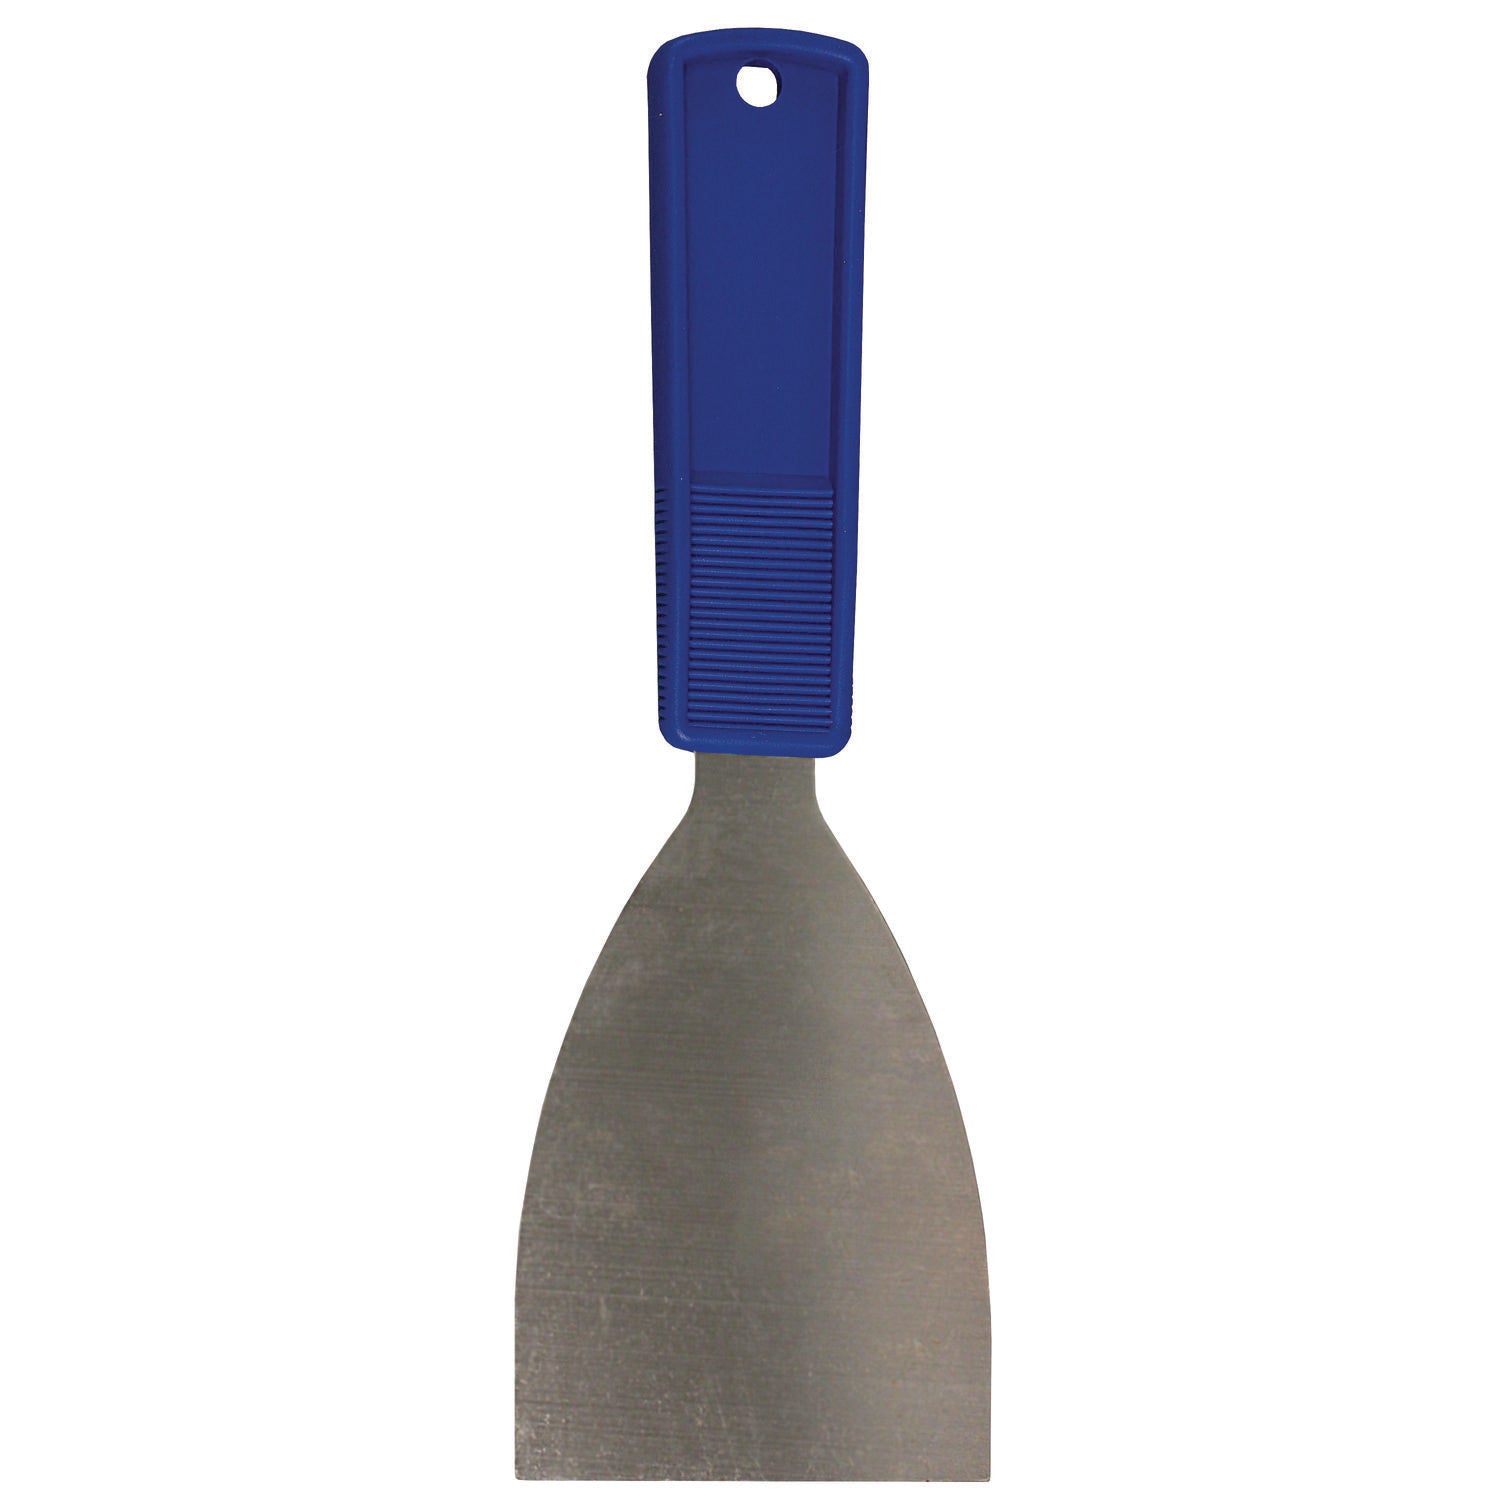 putty-knife-3-wide-stainless-steel-blade-blue-polypropylene-handle_imp3401dz - 1